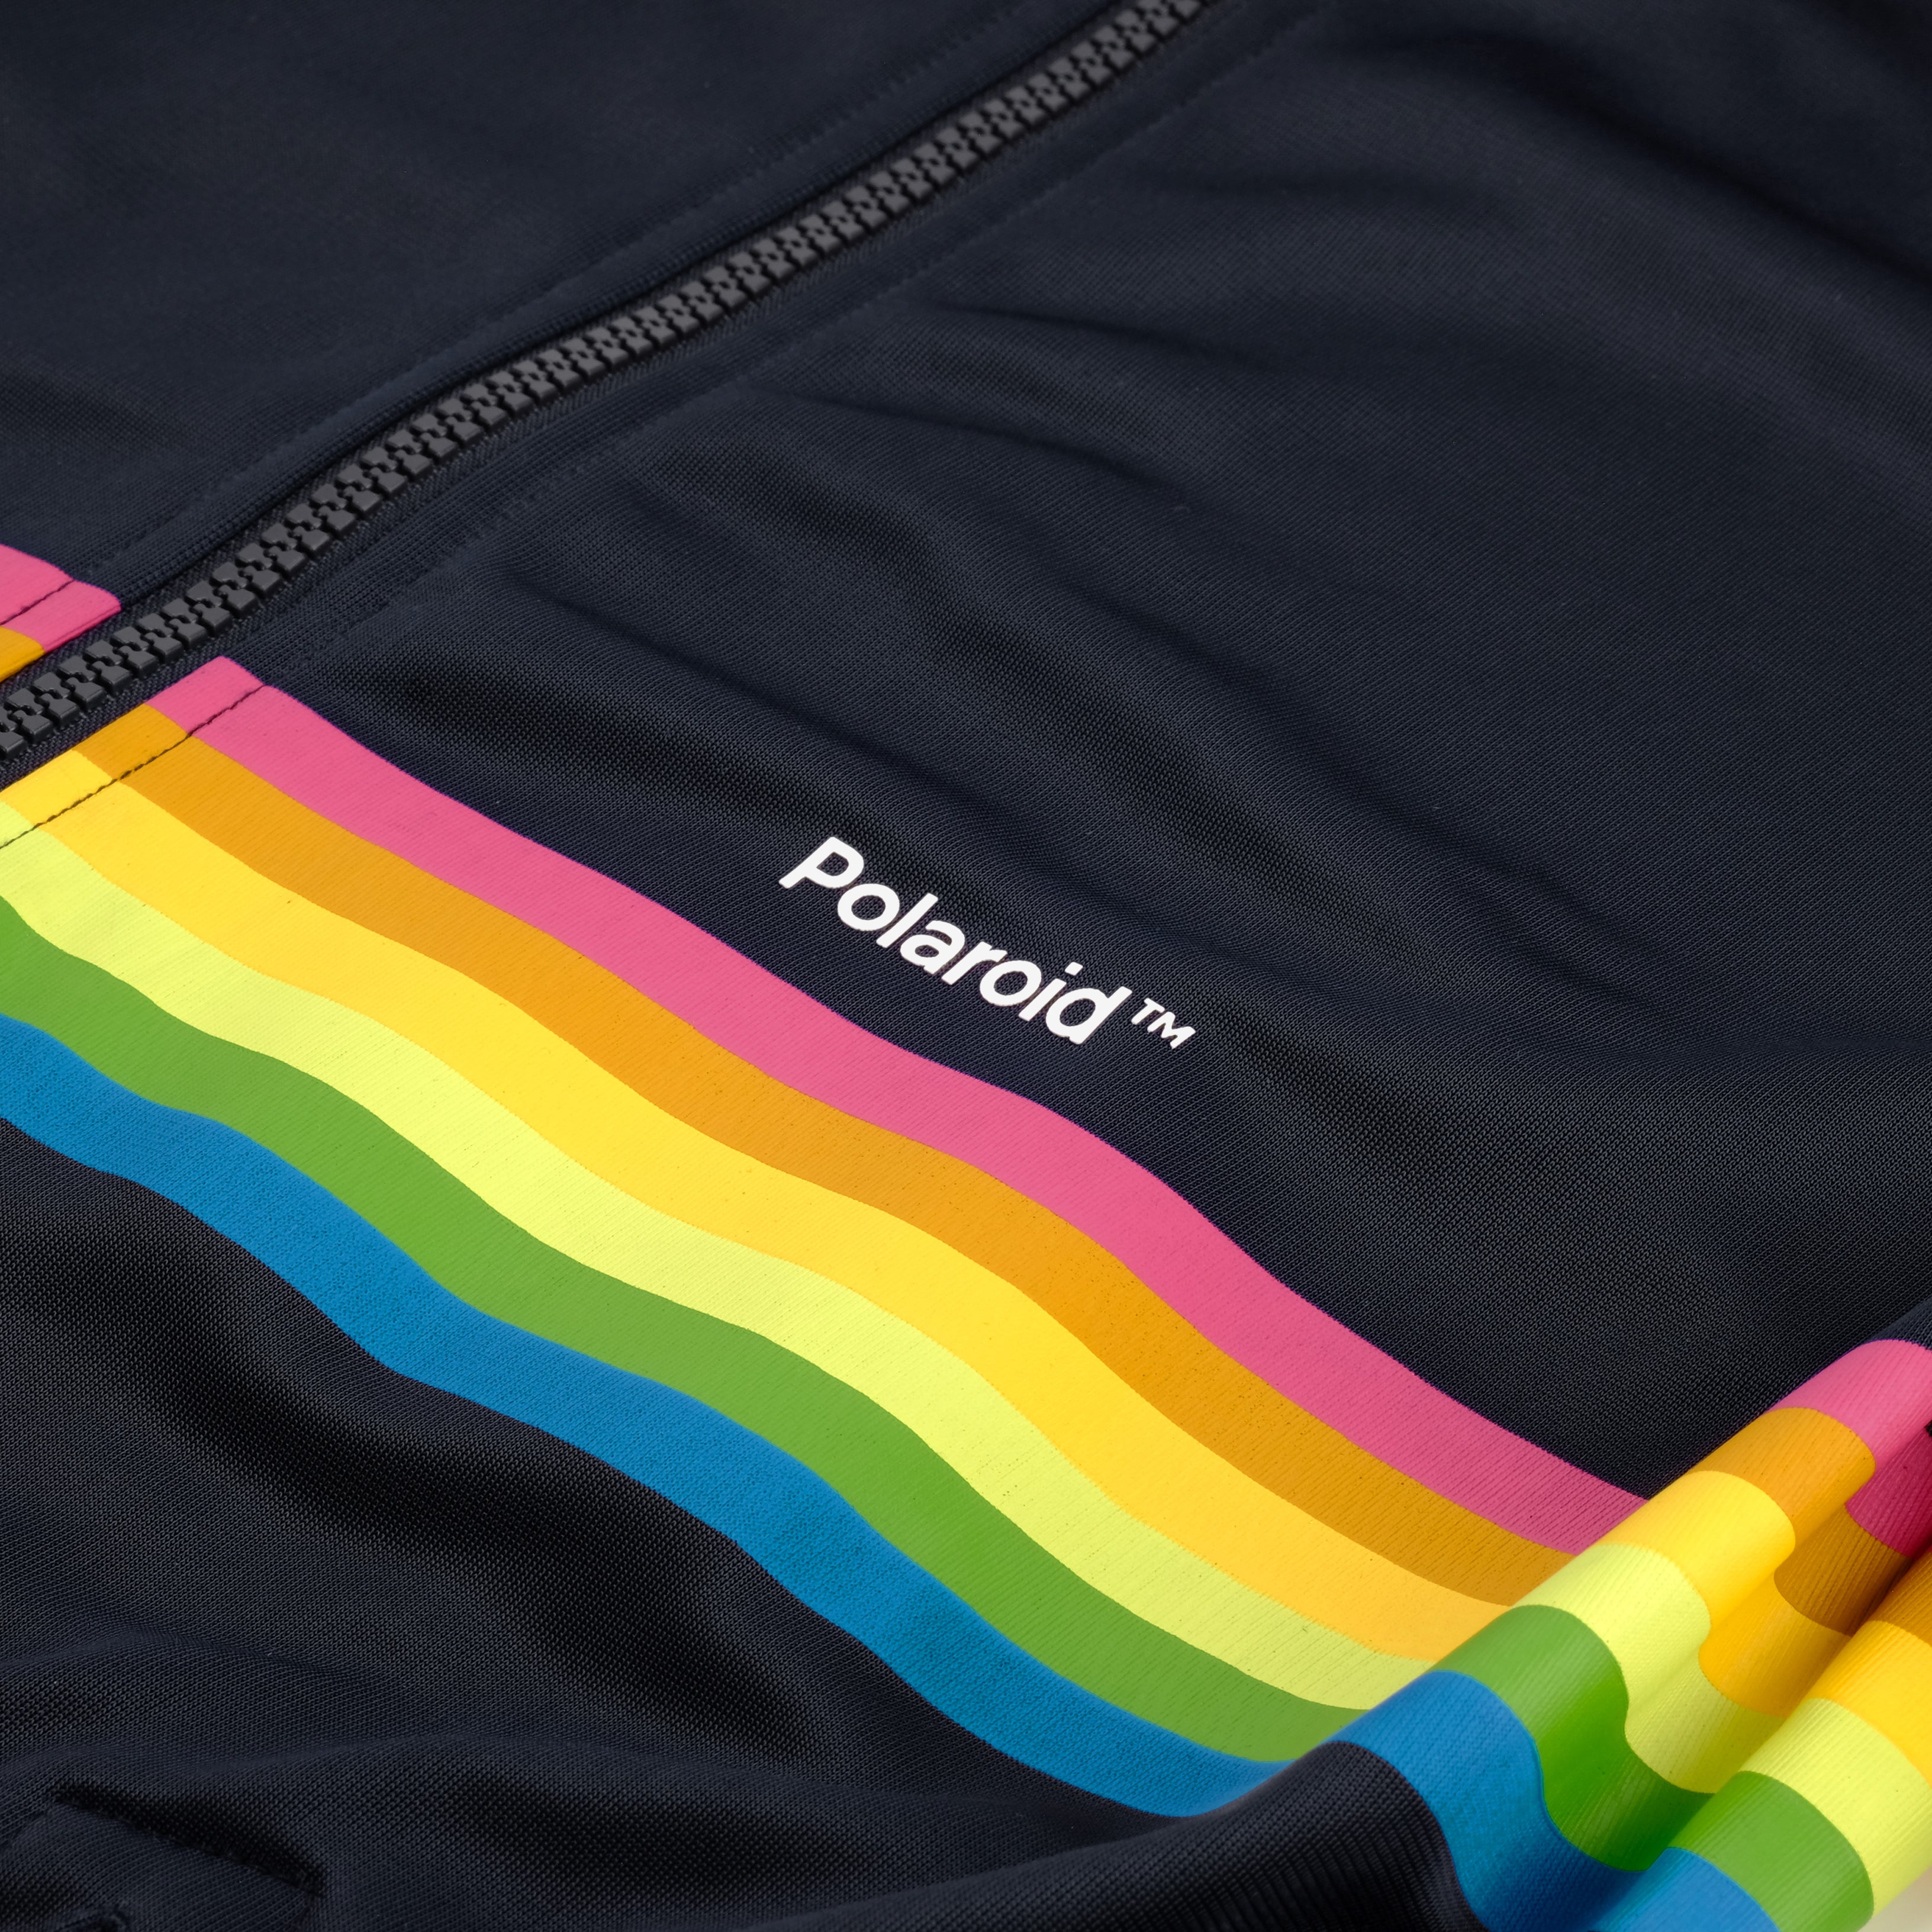 Polaroid Rainbow Factory Track Jacket